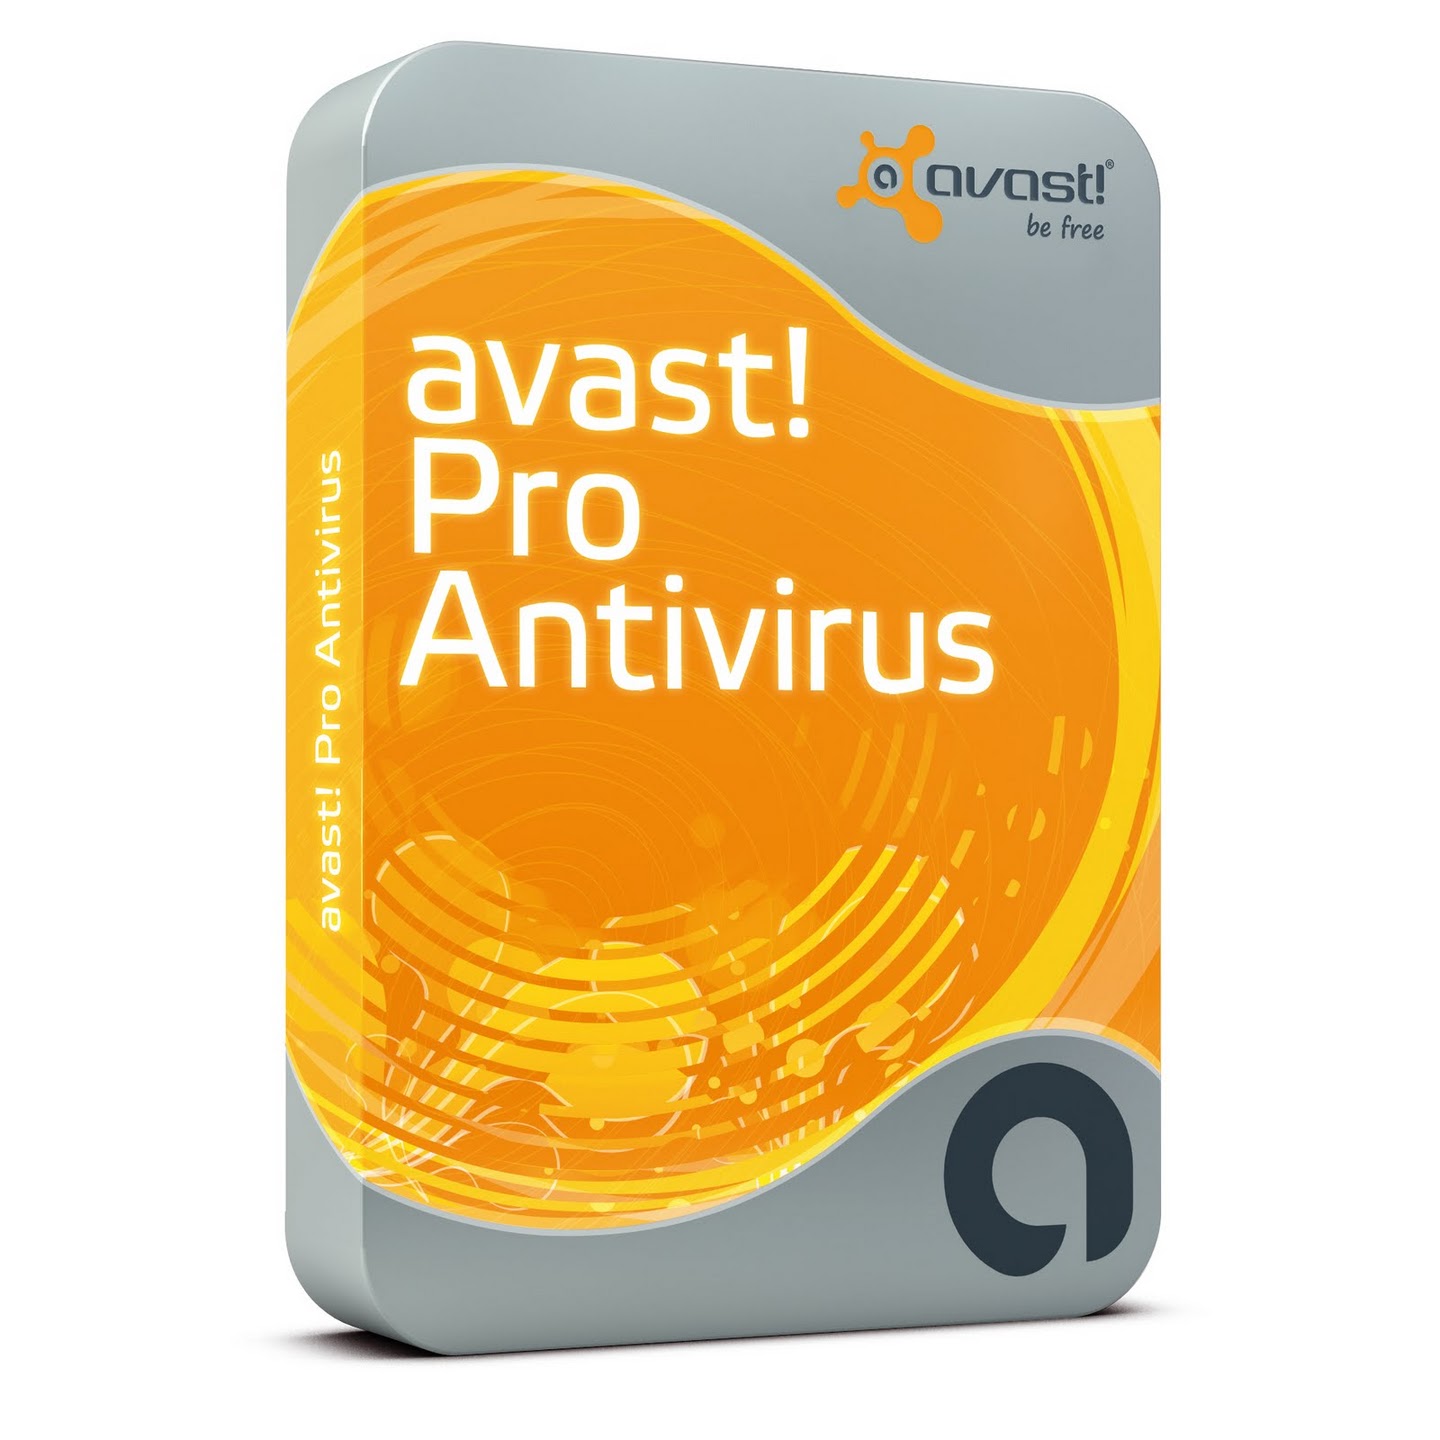 Avast free antivirus download